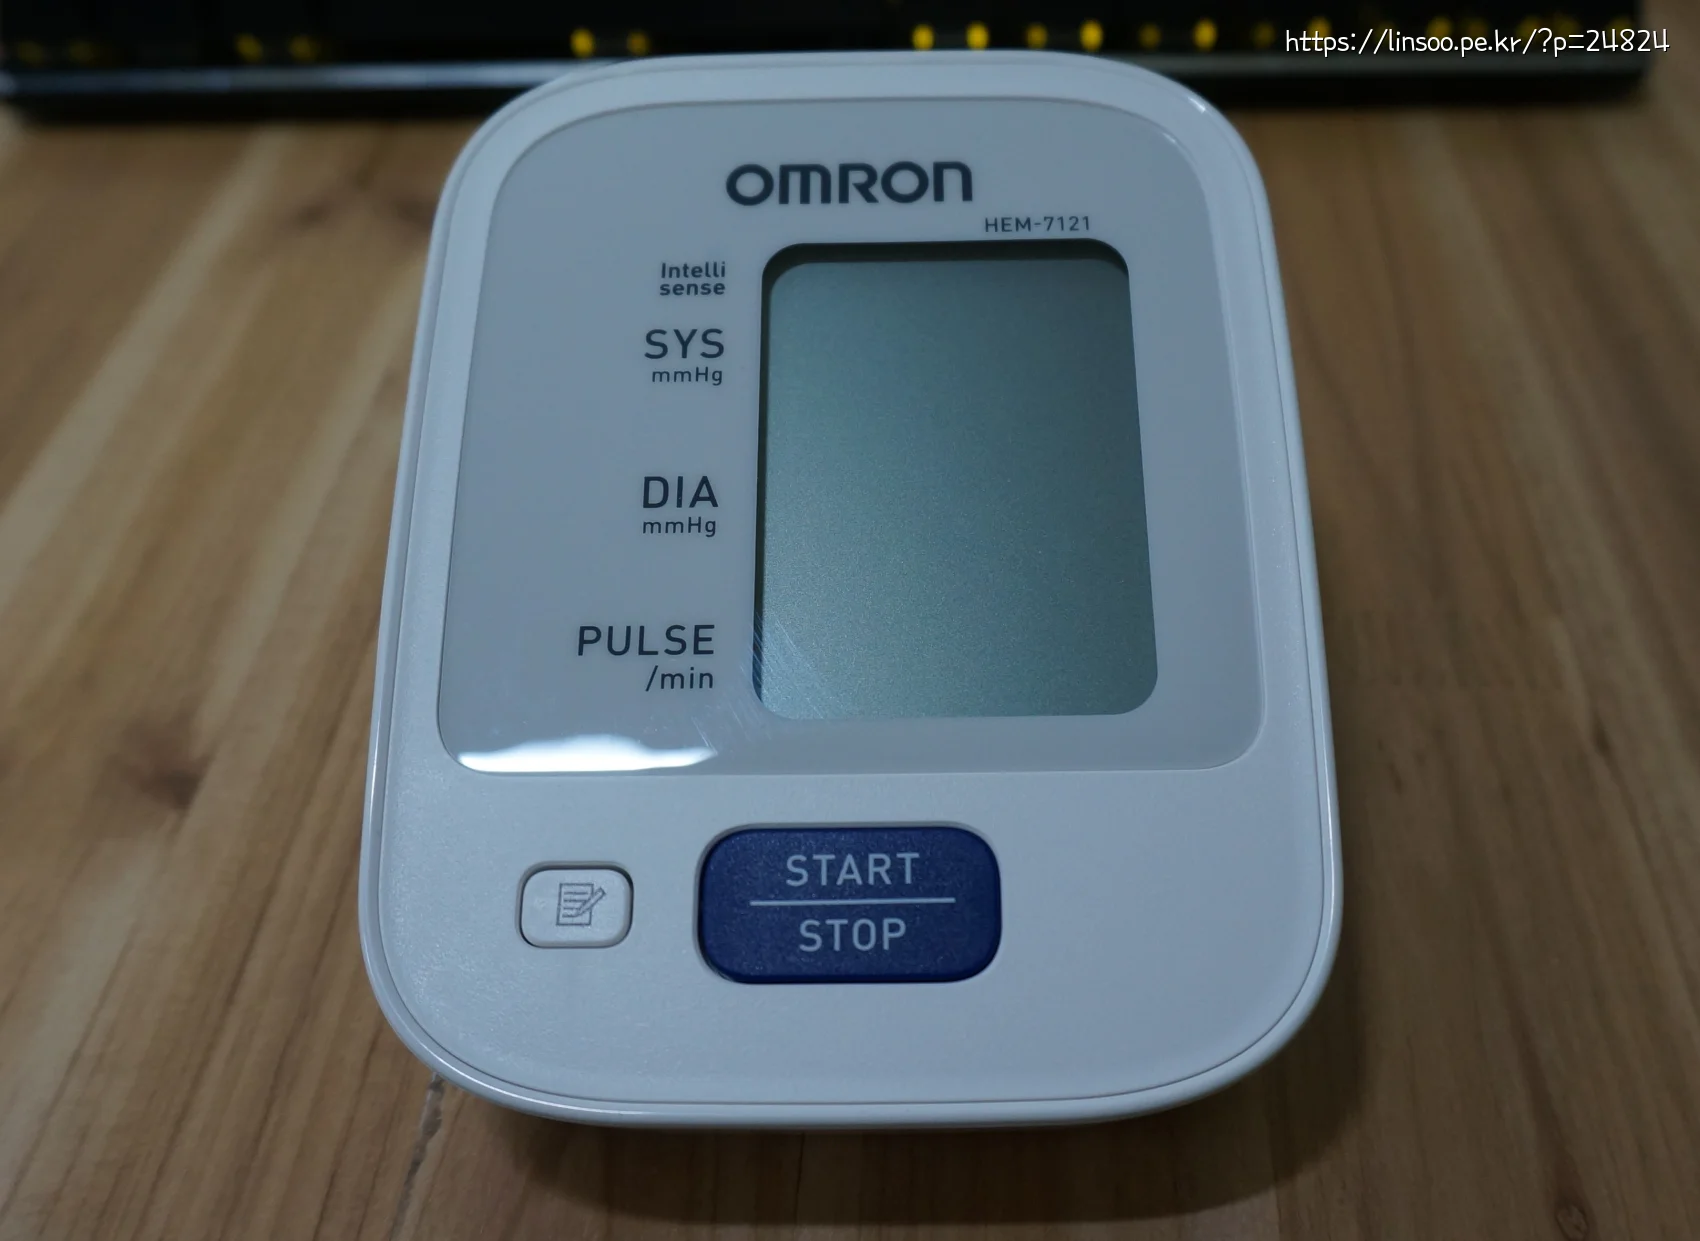 OMROM HEM-7121 제품 모습